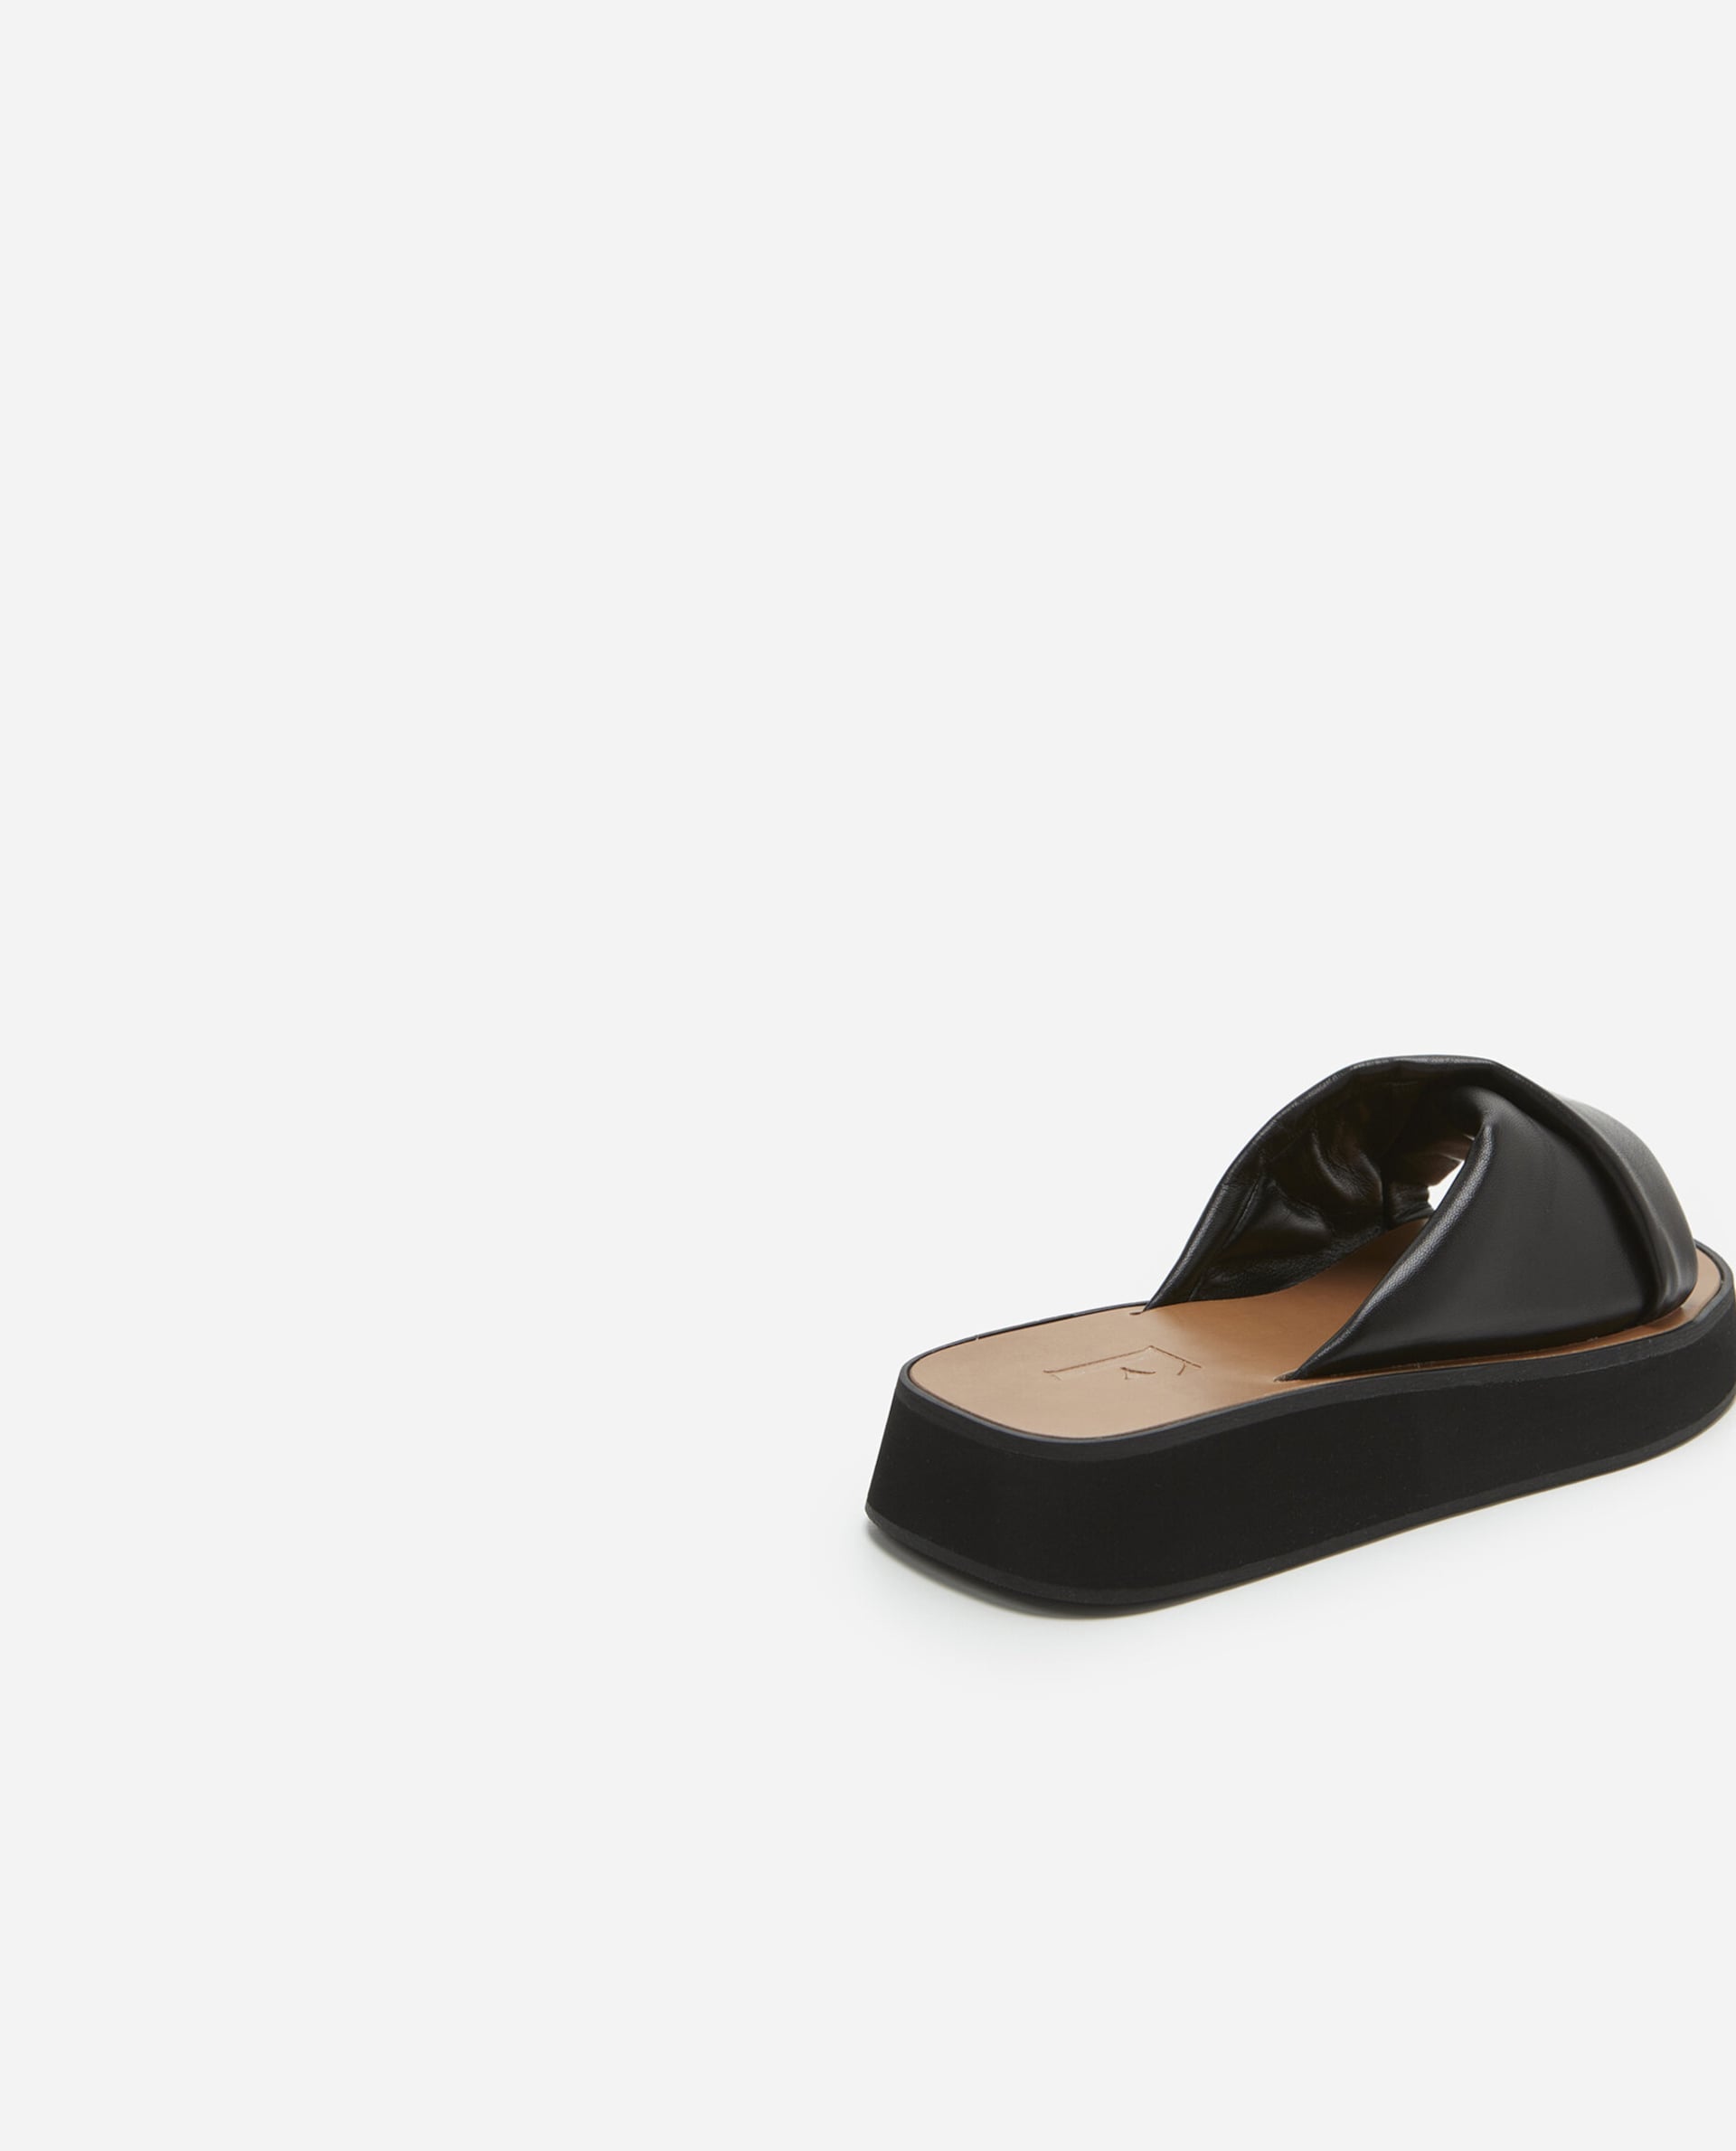 Bea Black Leather Flat Sandals 22010721101-001 - 6